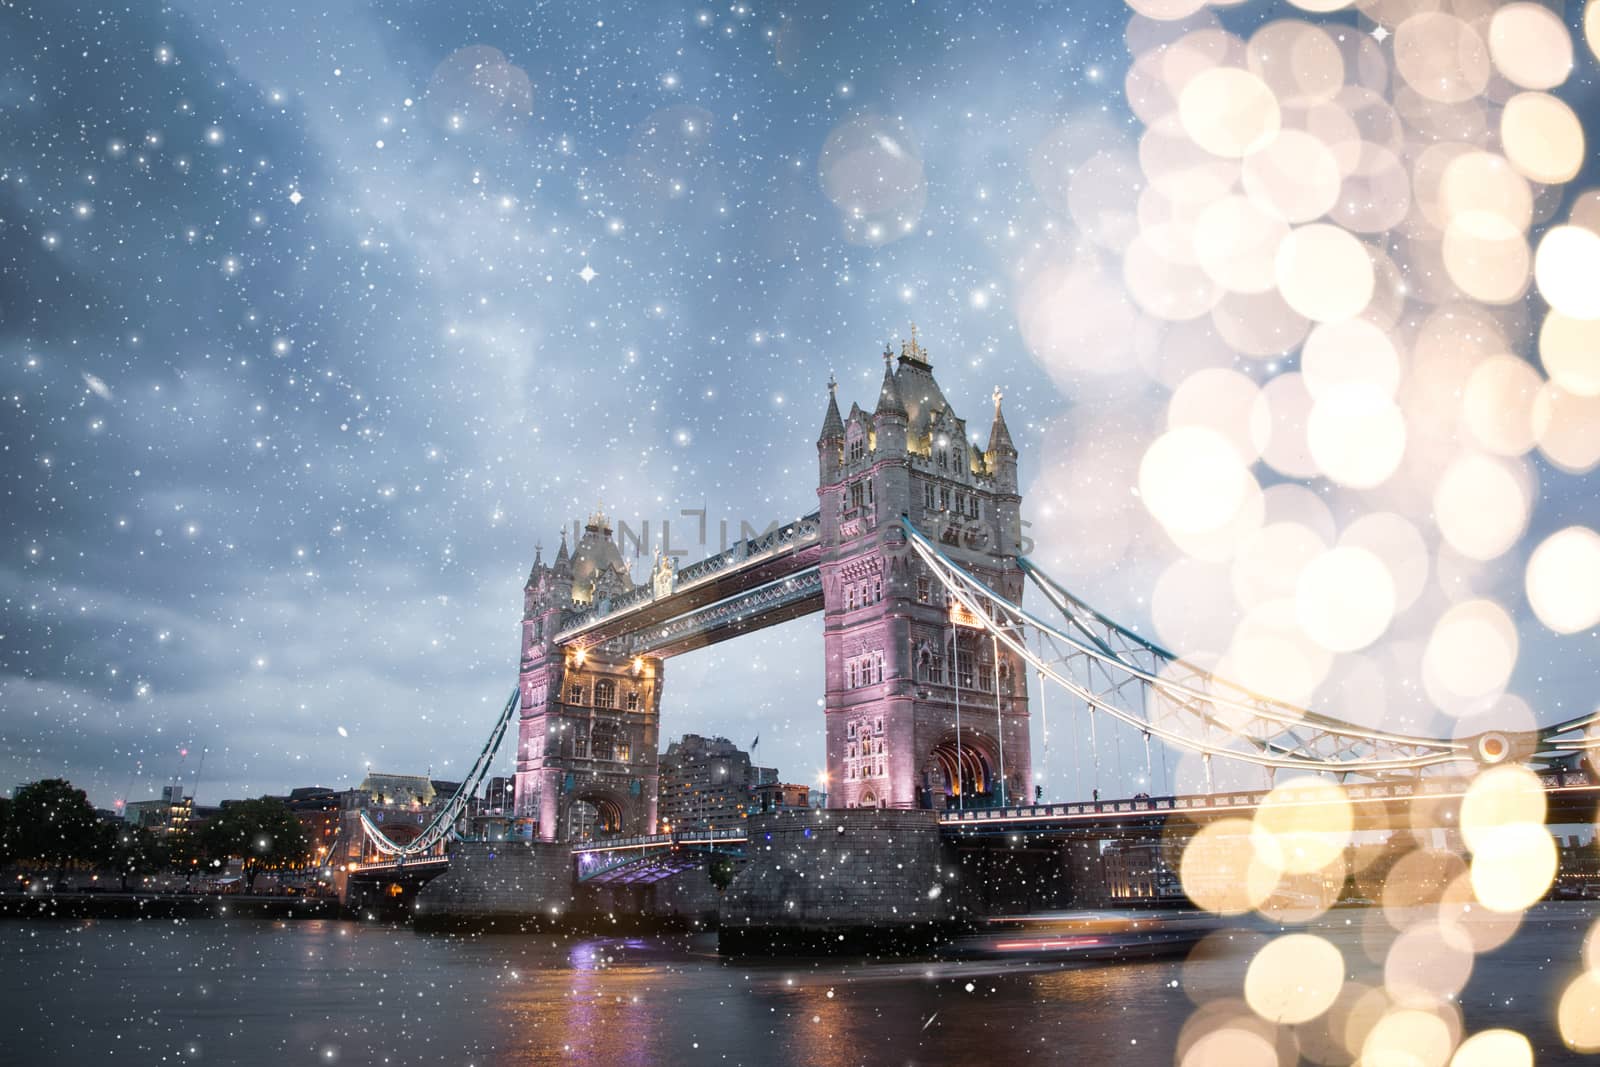 snowing in London, UK - winterholidays  in the city by melis